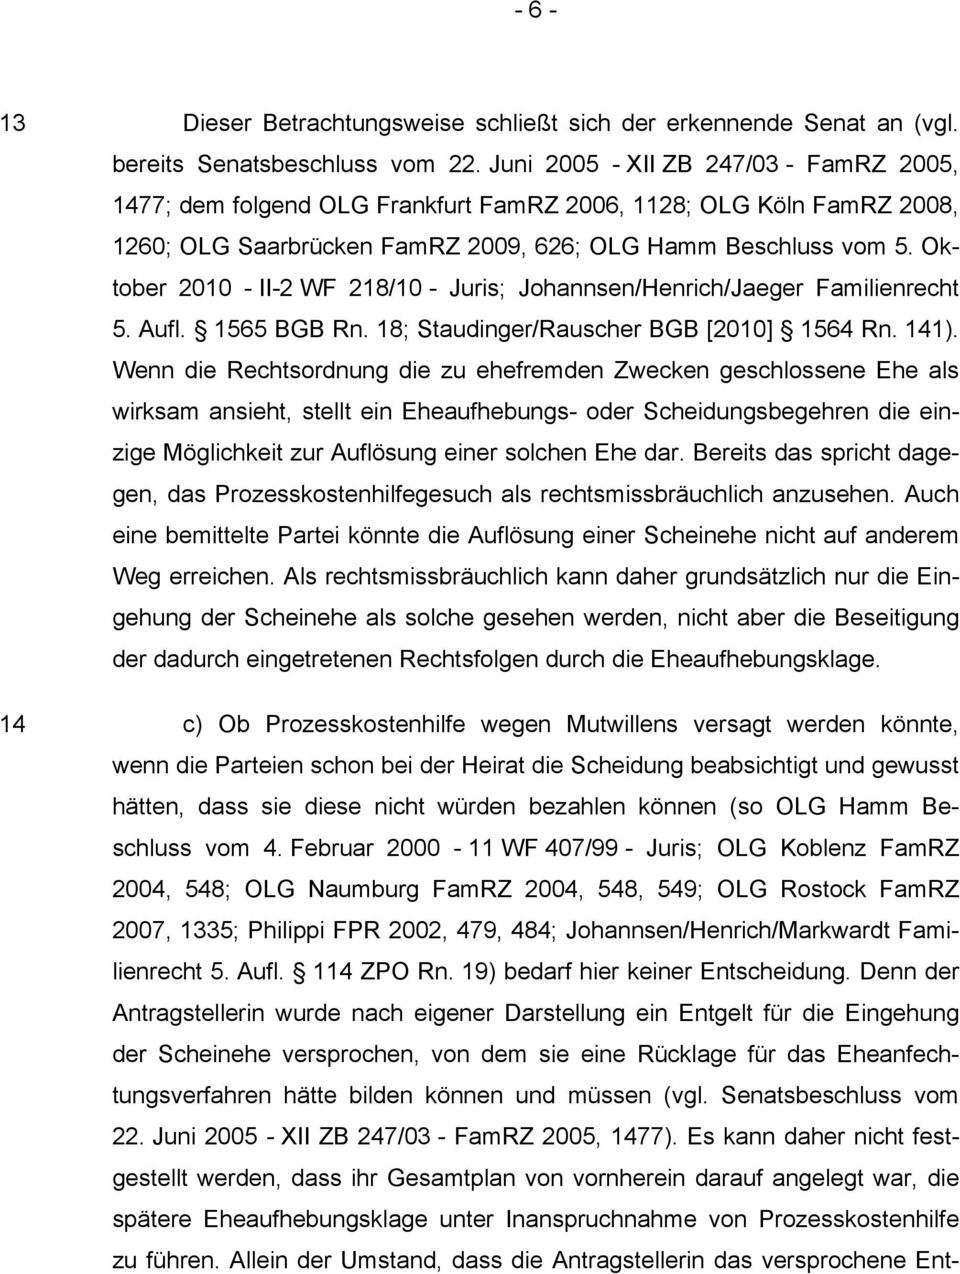 Oktober 2010 - II-2 WF 218/10 - Juris; Johannsen/Henrich/Jaeger Familienrecht 5. Aufl. 1565 BGB Rn. 18; Staudinger/Rauscher BGB [2010] 1564 Rn. 141).